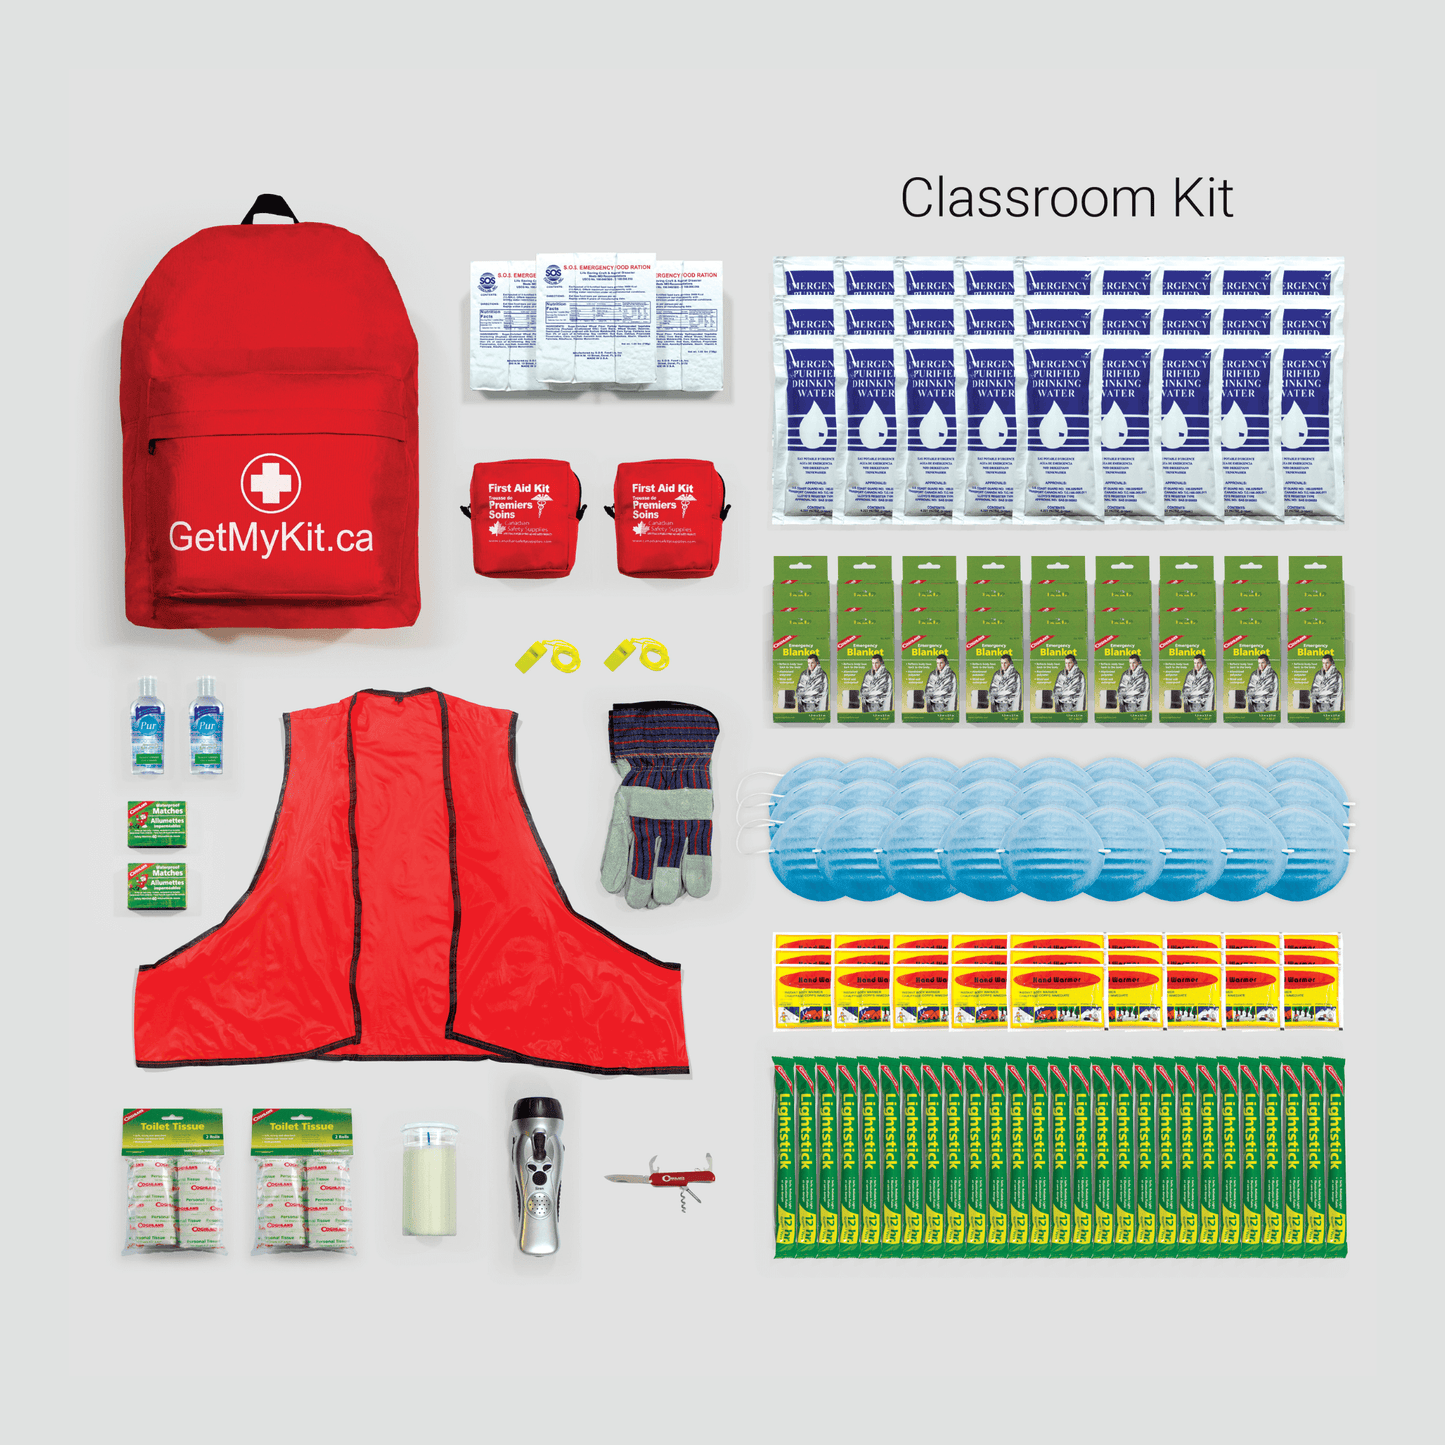 24 person classroom earthquake emergency survival kit.